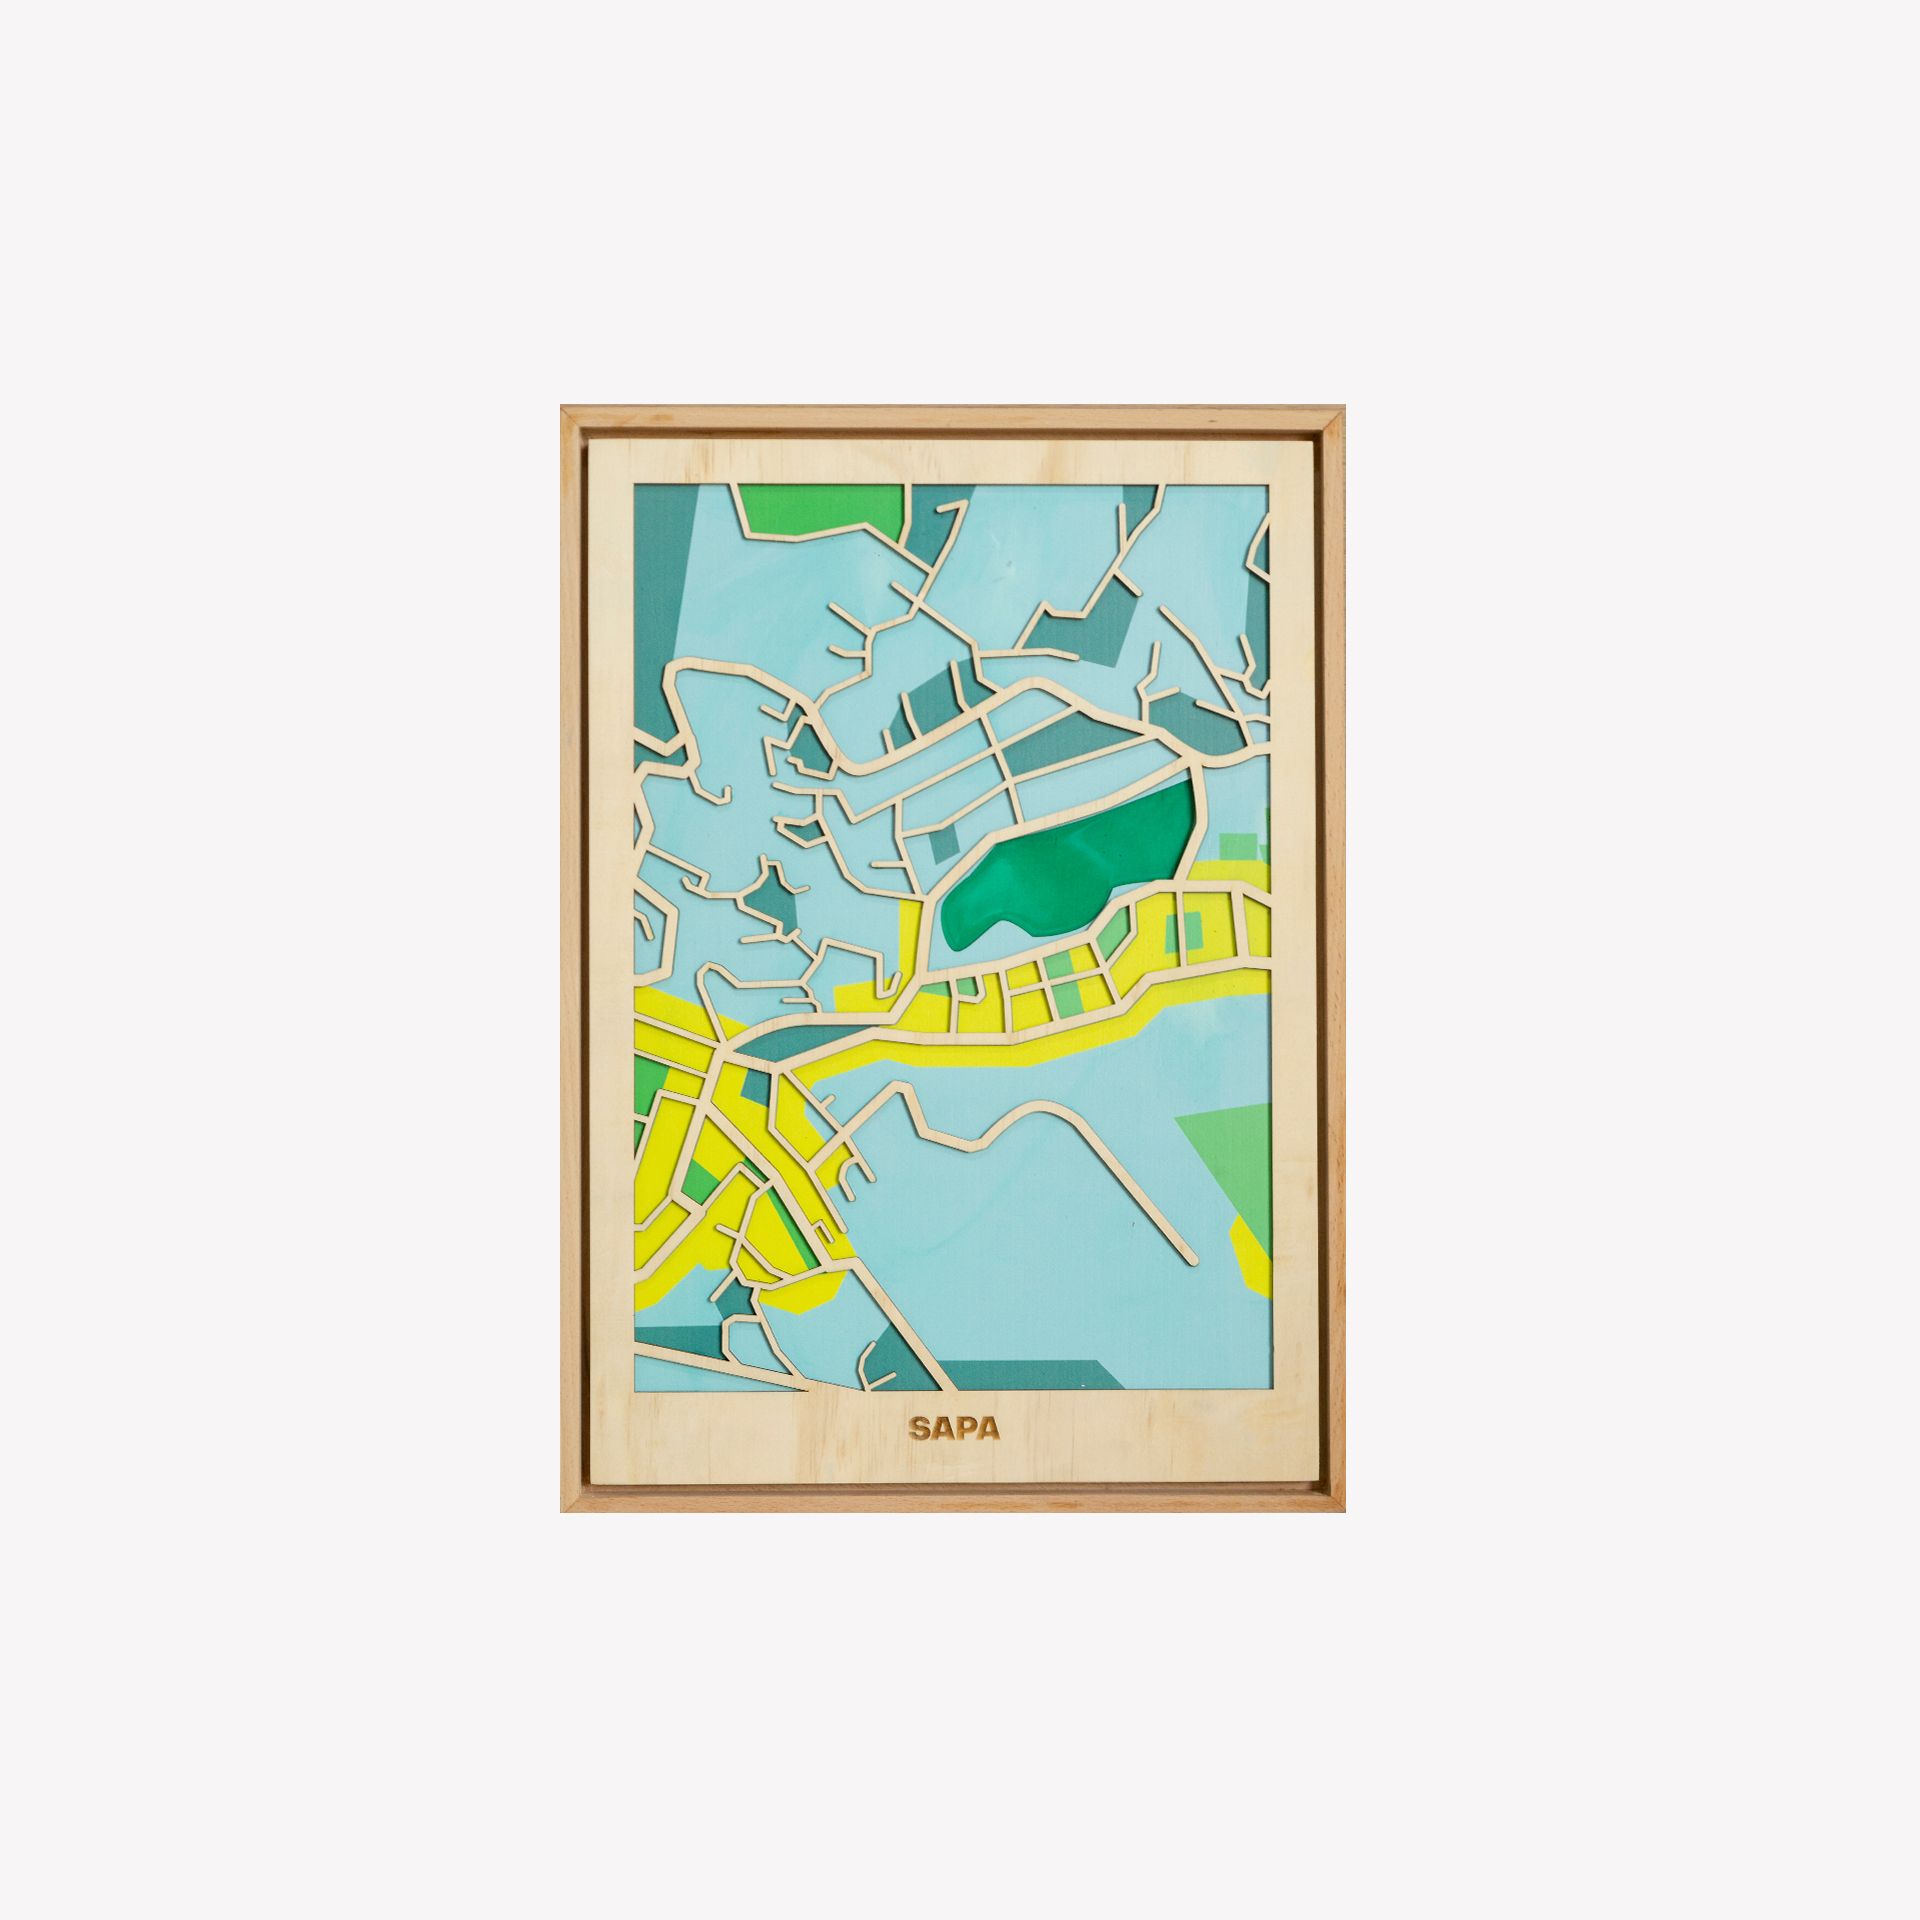  Wooden City Map - Sapa 